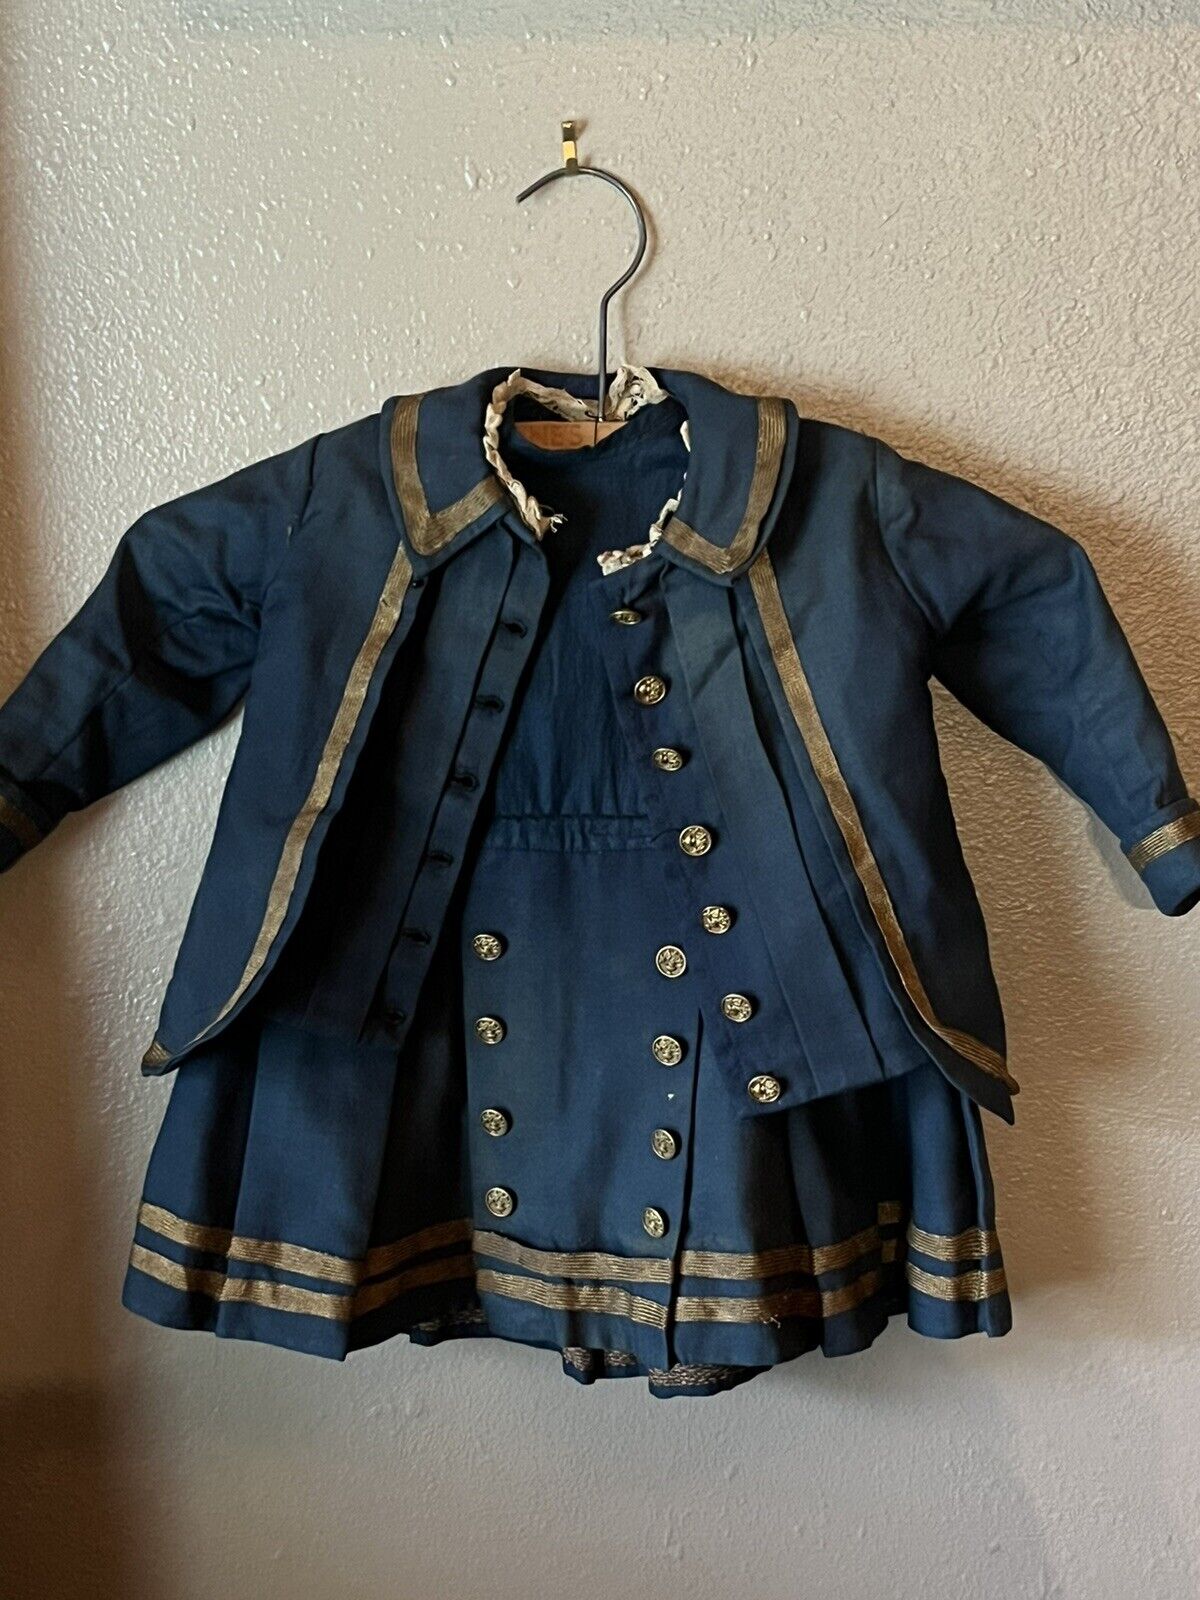 Rare Original Civil War Uniform Dress & Shell Jacket Hand Made Child’s Uniform